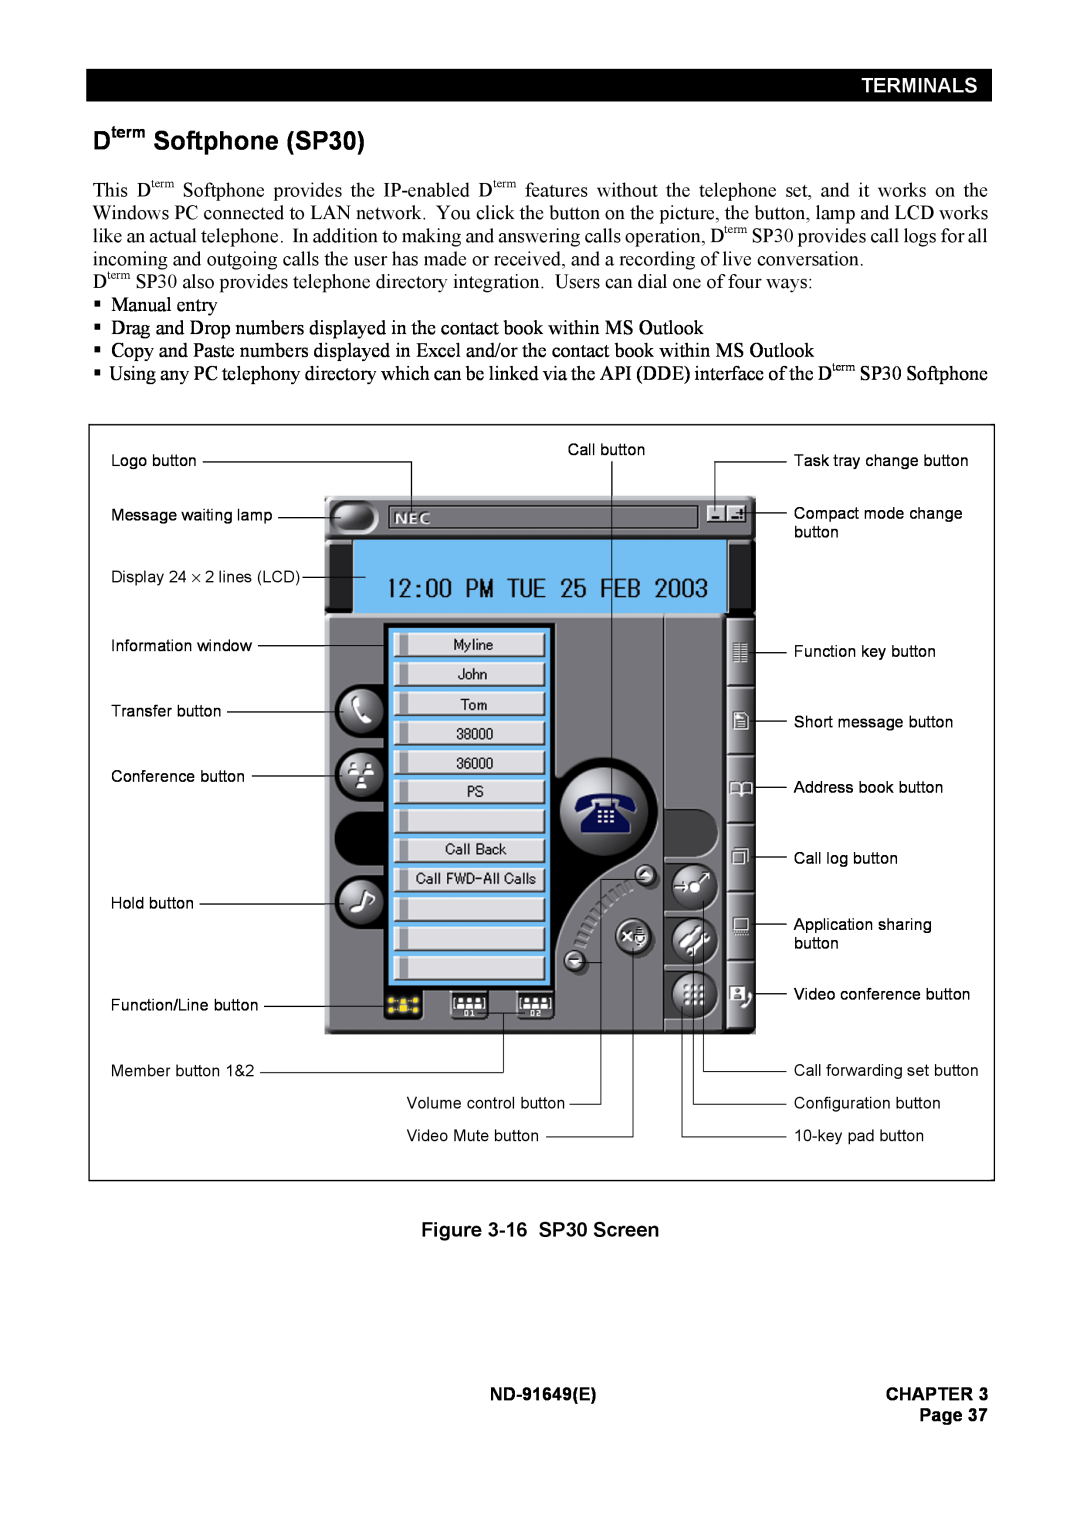 NEC ND-91649 manual Dterm Softphone SP30, Terminals, 16 SP30 Screen 